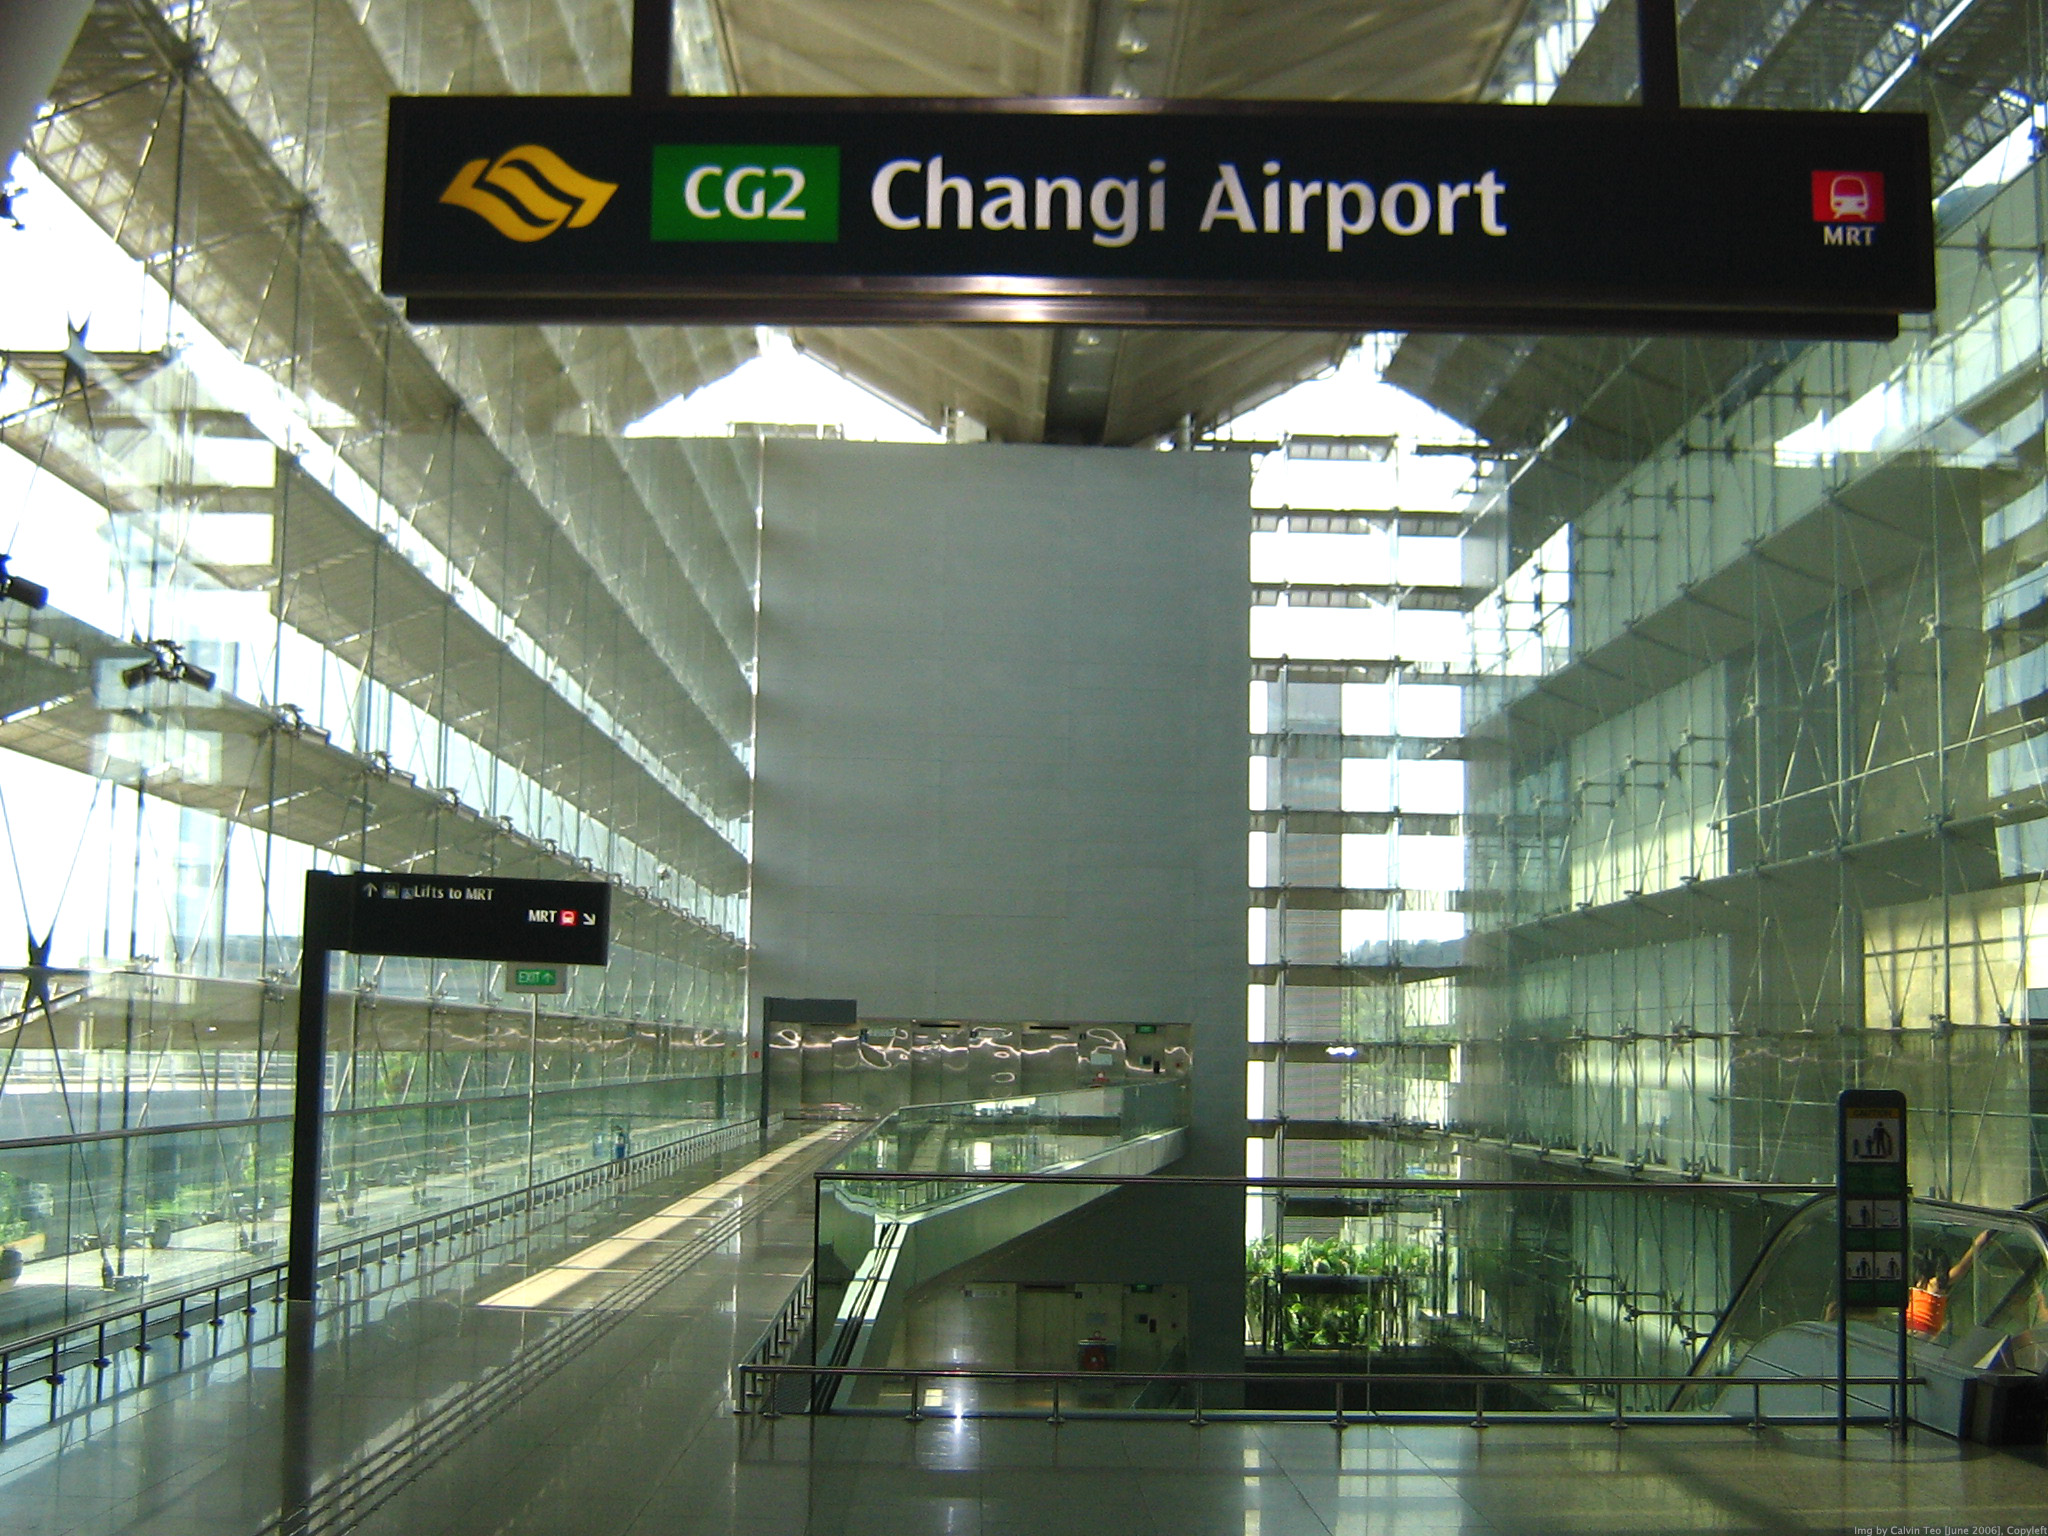 Singapore Changi Airport Terminal 2 Shops